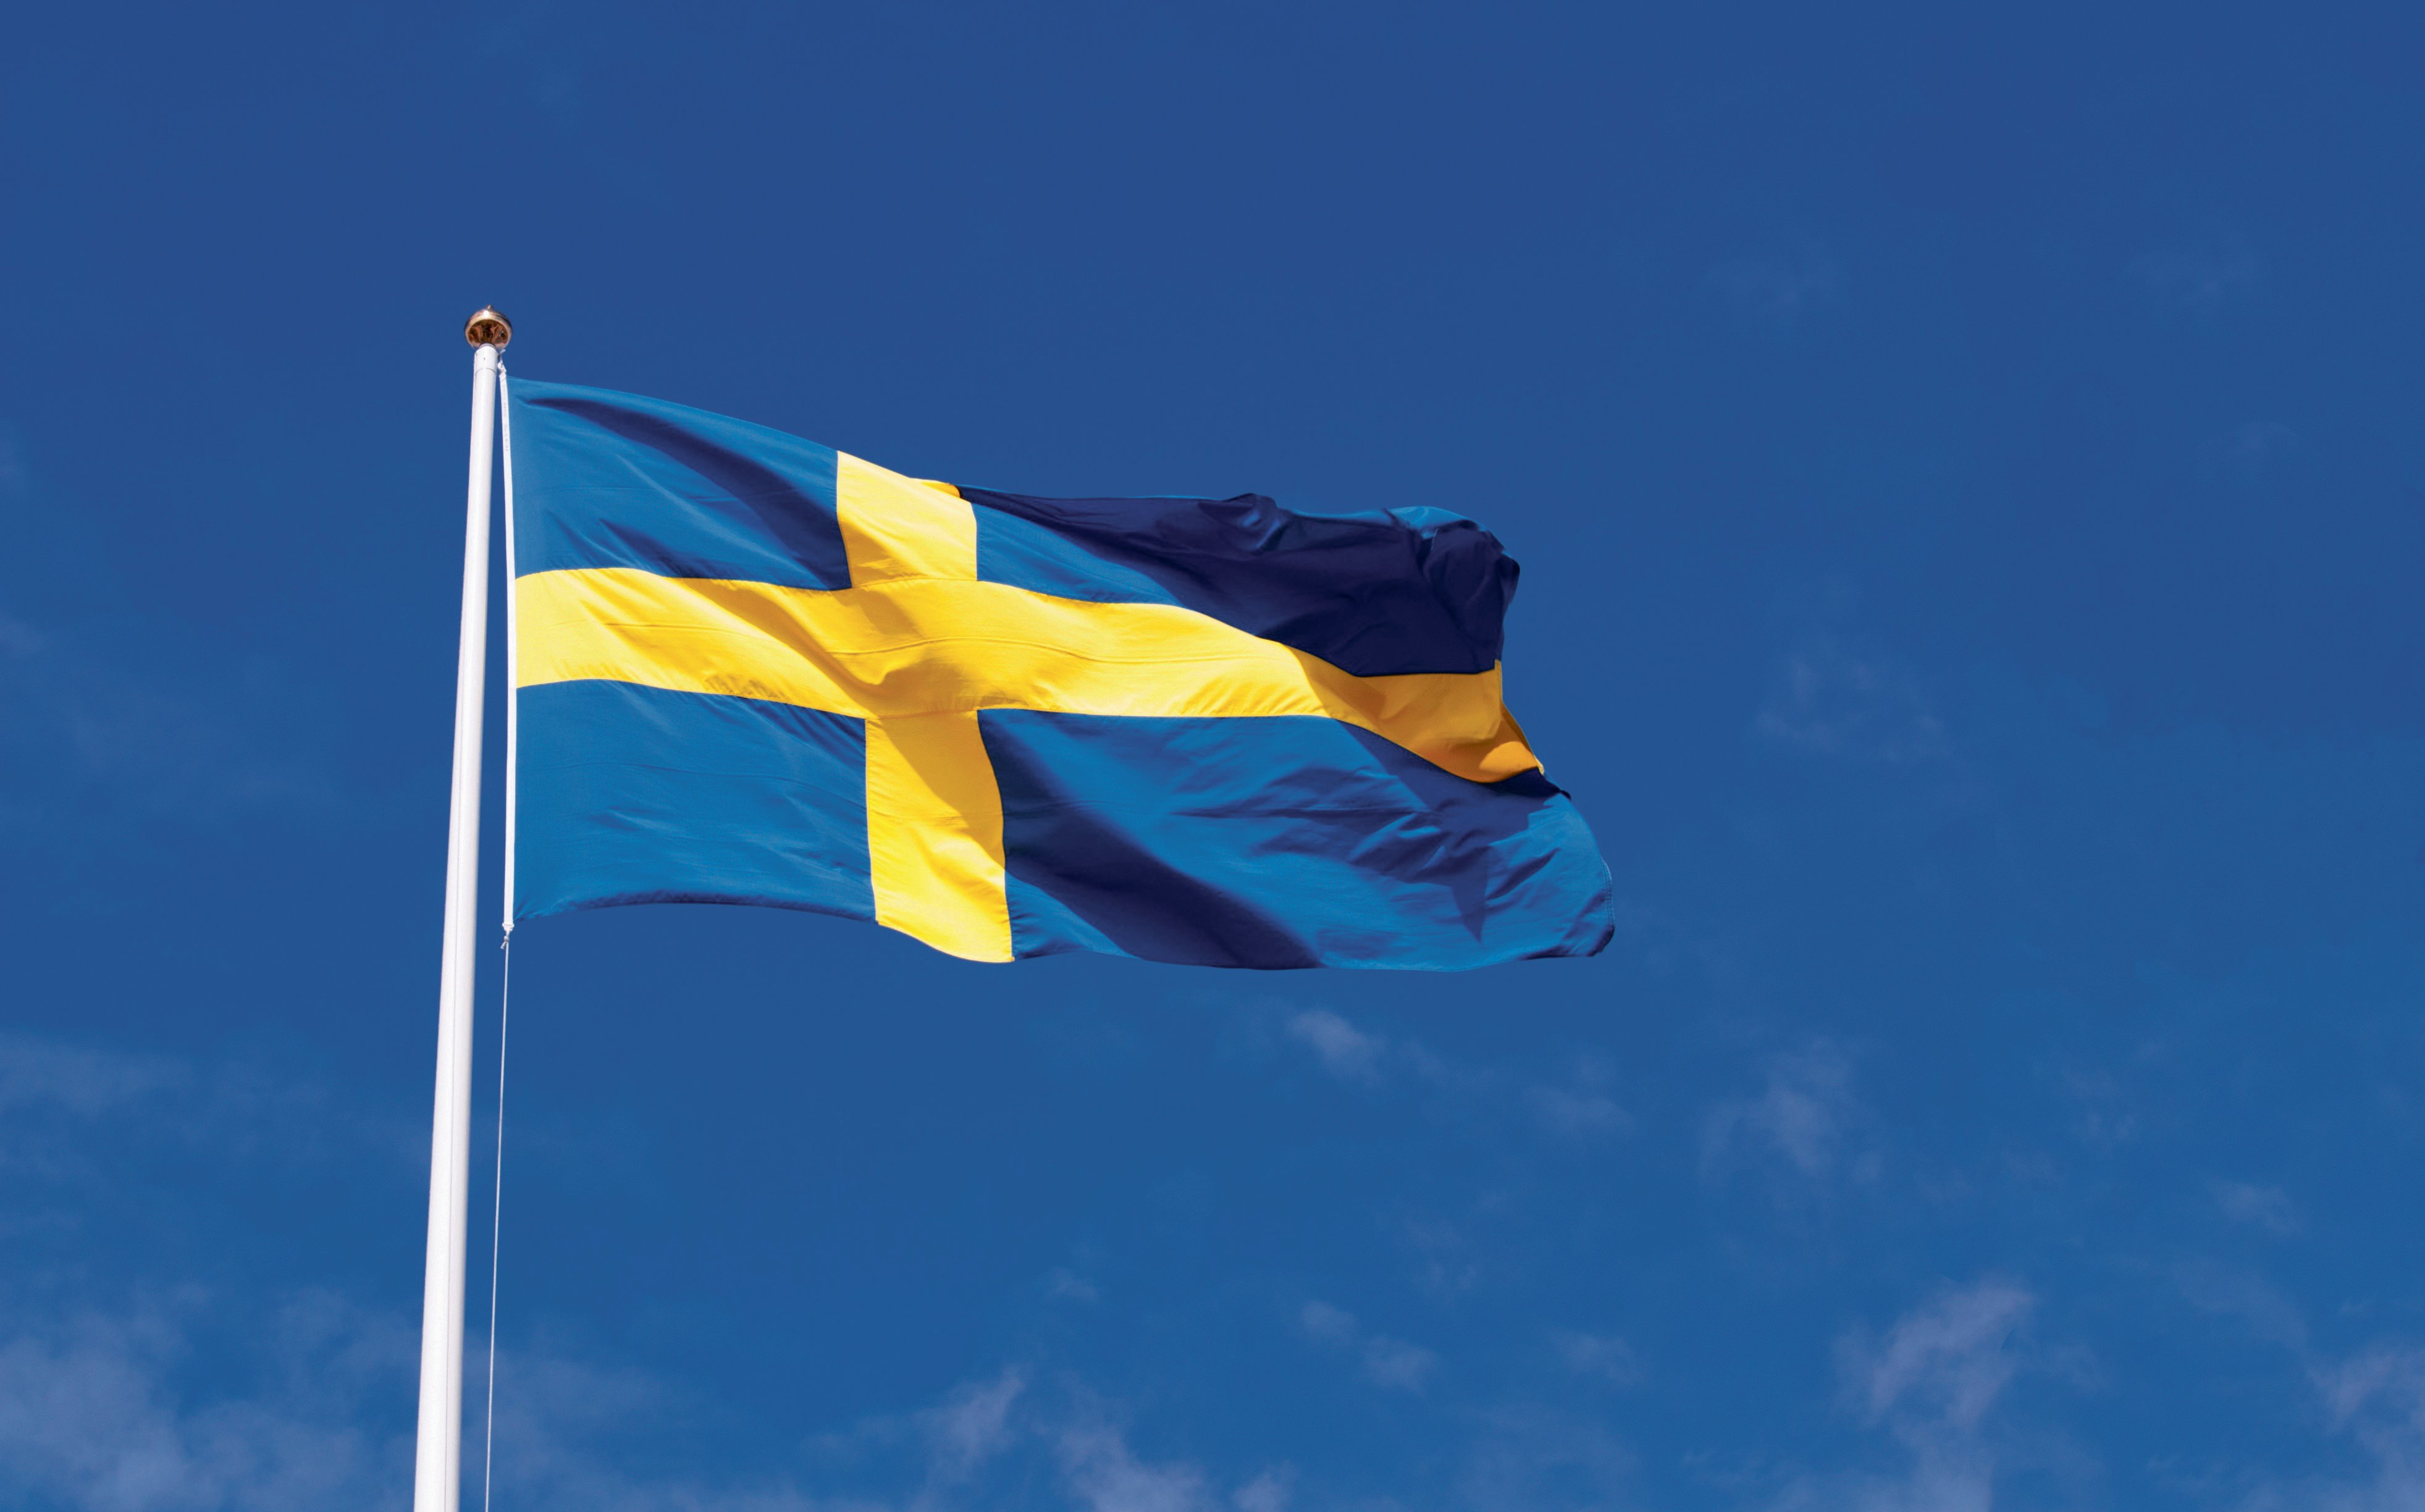 svensk flagga vajar i vinden